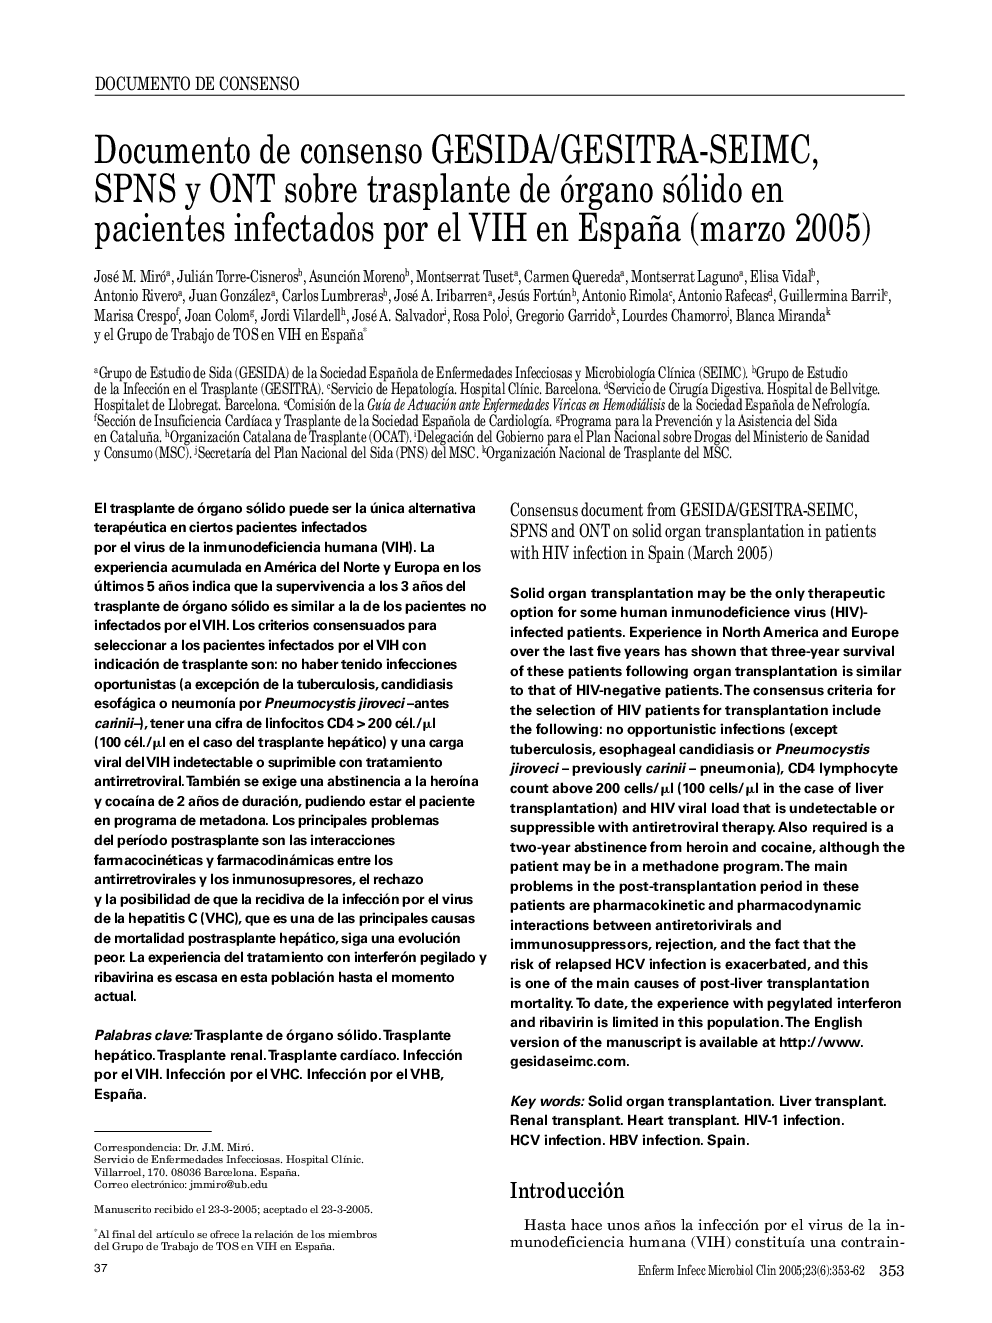 Documento de consenso GESIDA/GESITRA-SEIMC, SPNS y ONT sobre trasplante de órgano sólido en pacientes infectados por el VIH en España (marzo 2005)